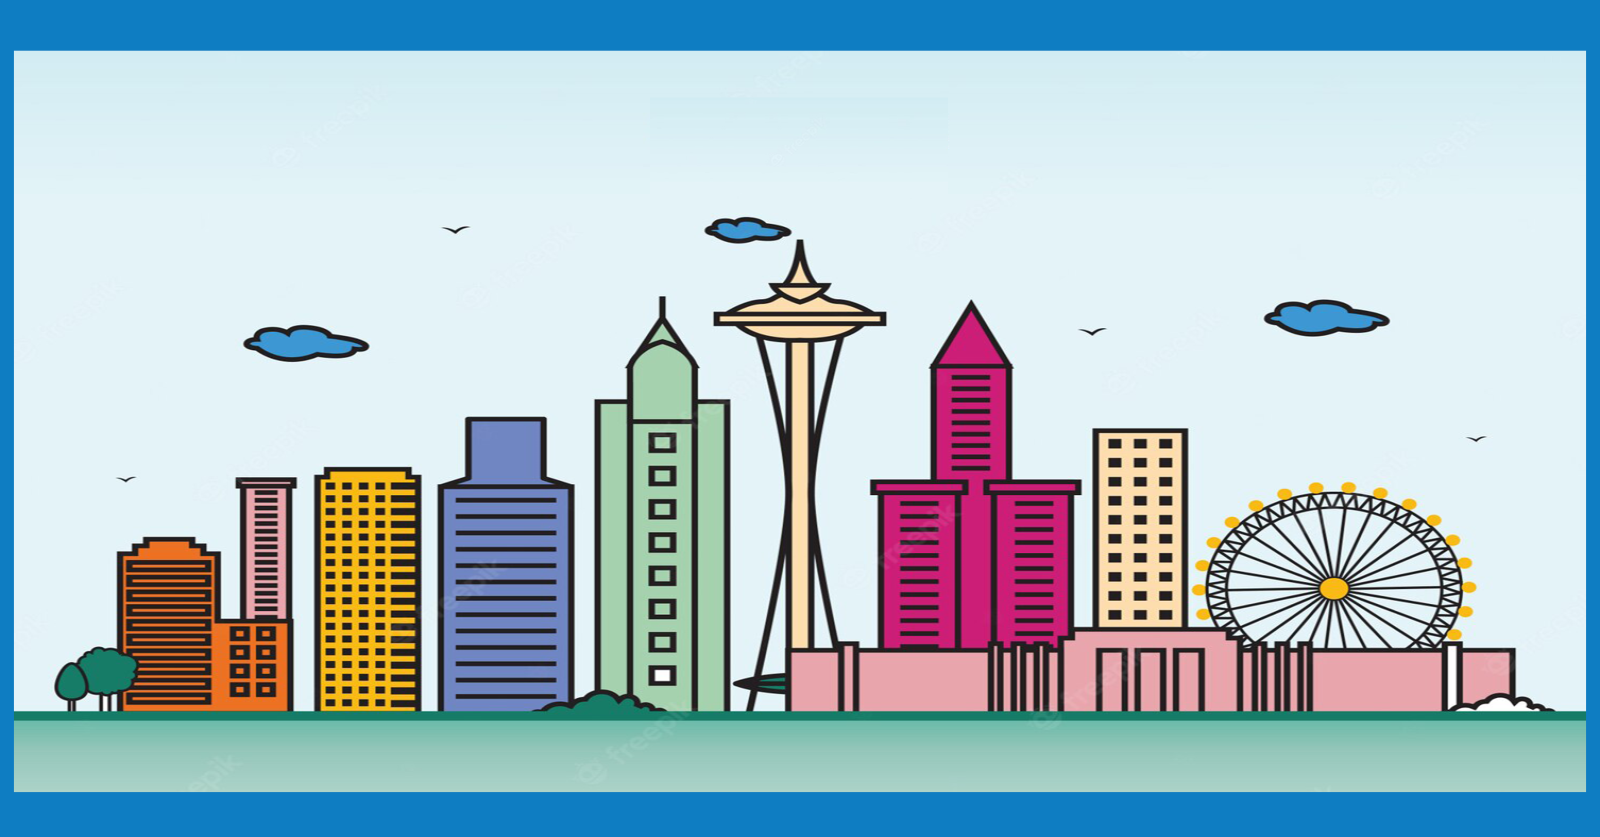 An illustration of the Seattle skyline